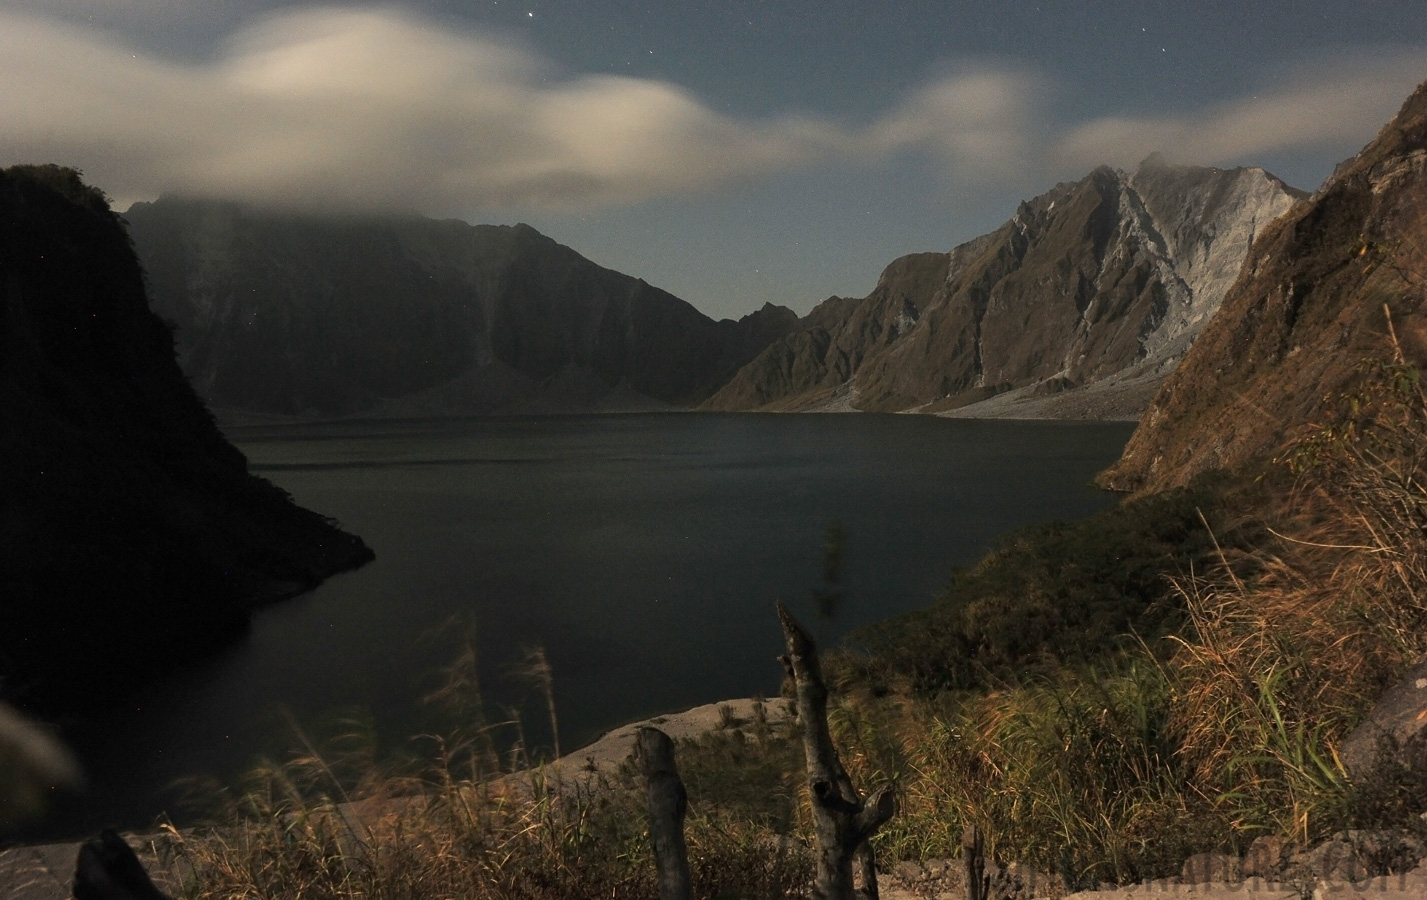 Mount Pinatubo [28 mm, 30.0 sec at f / 11, ISO 1250]